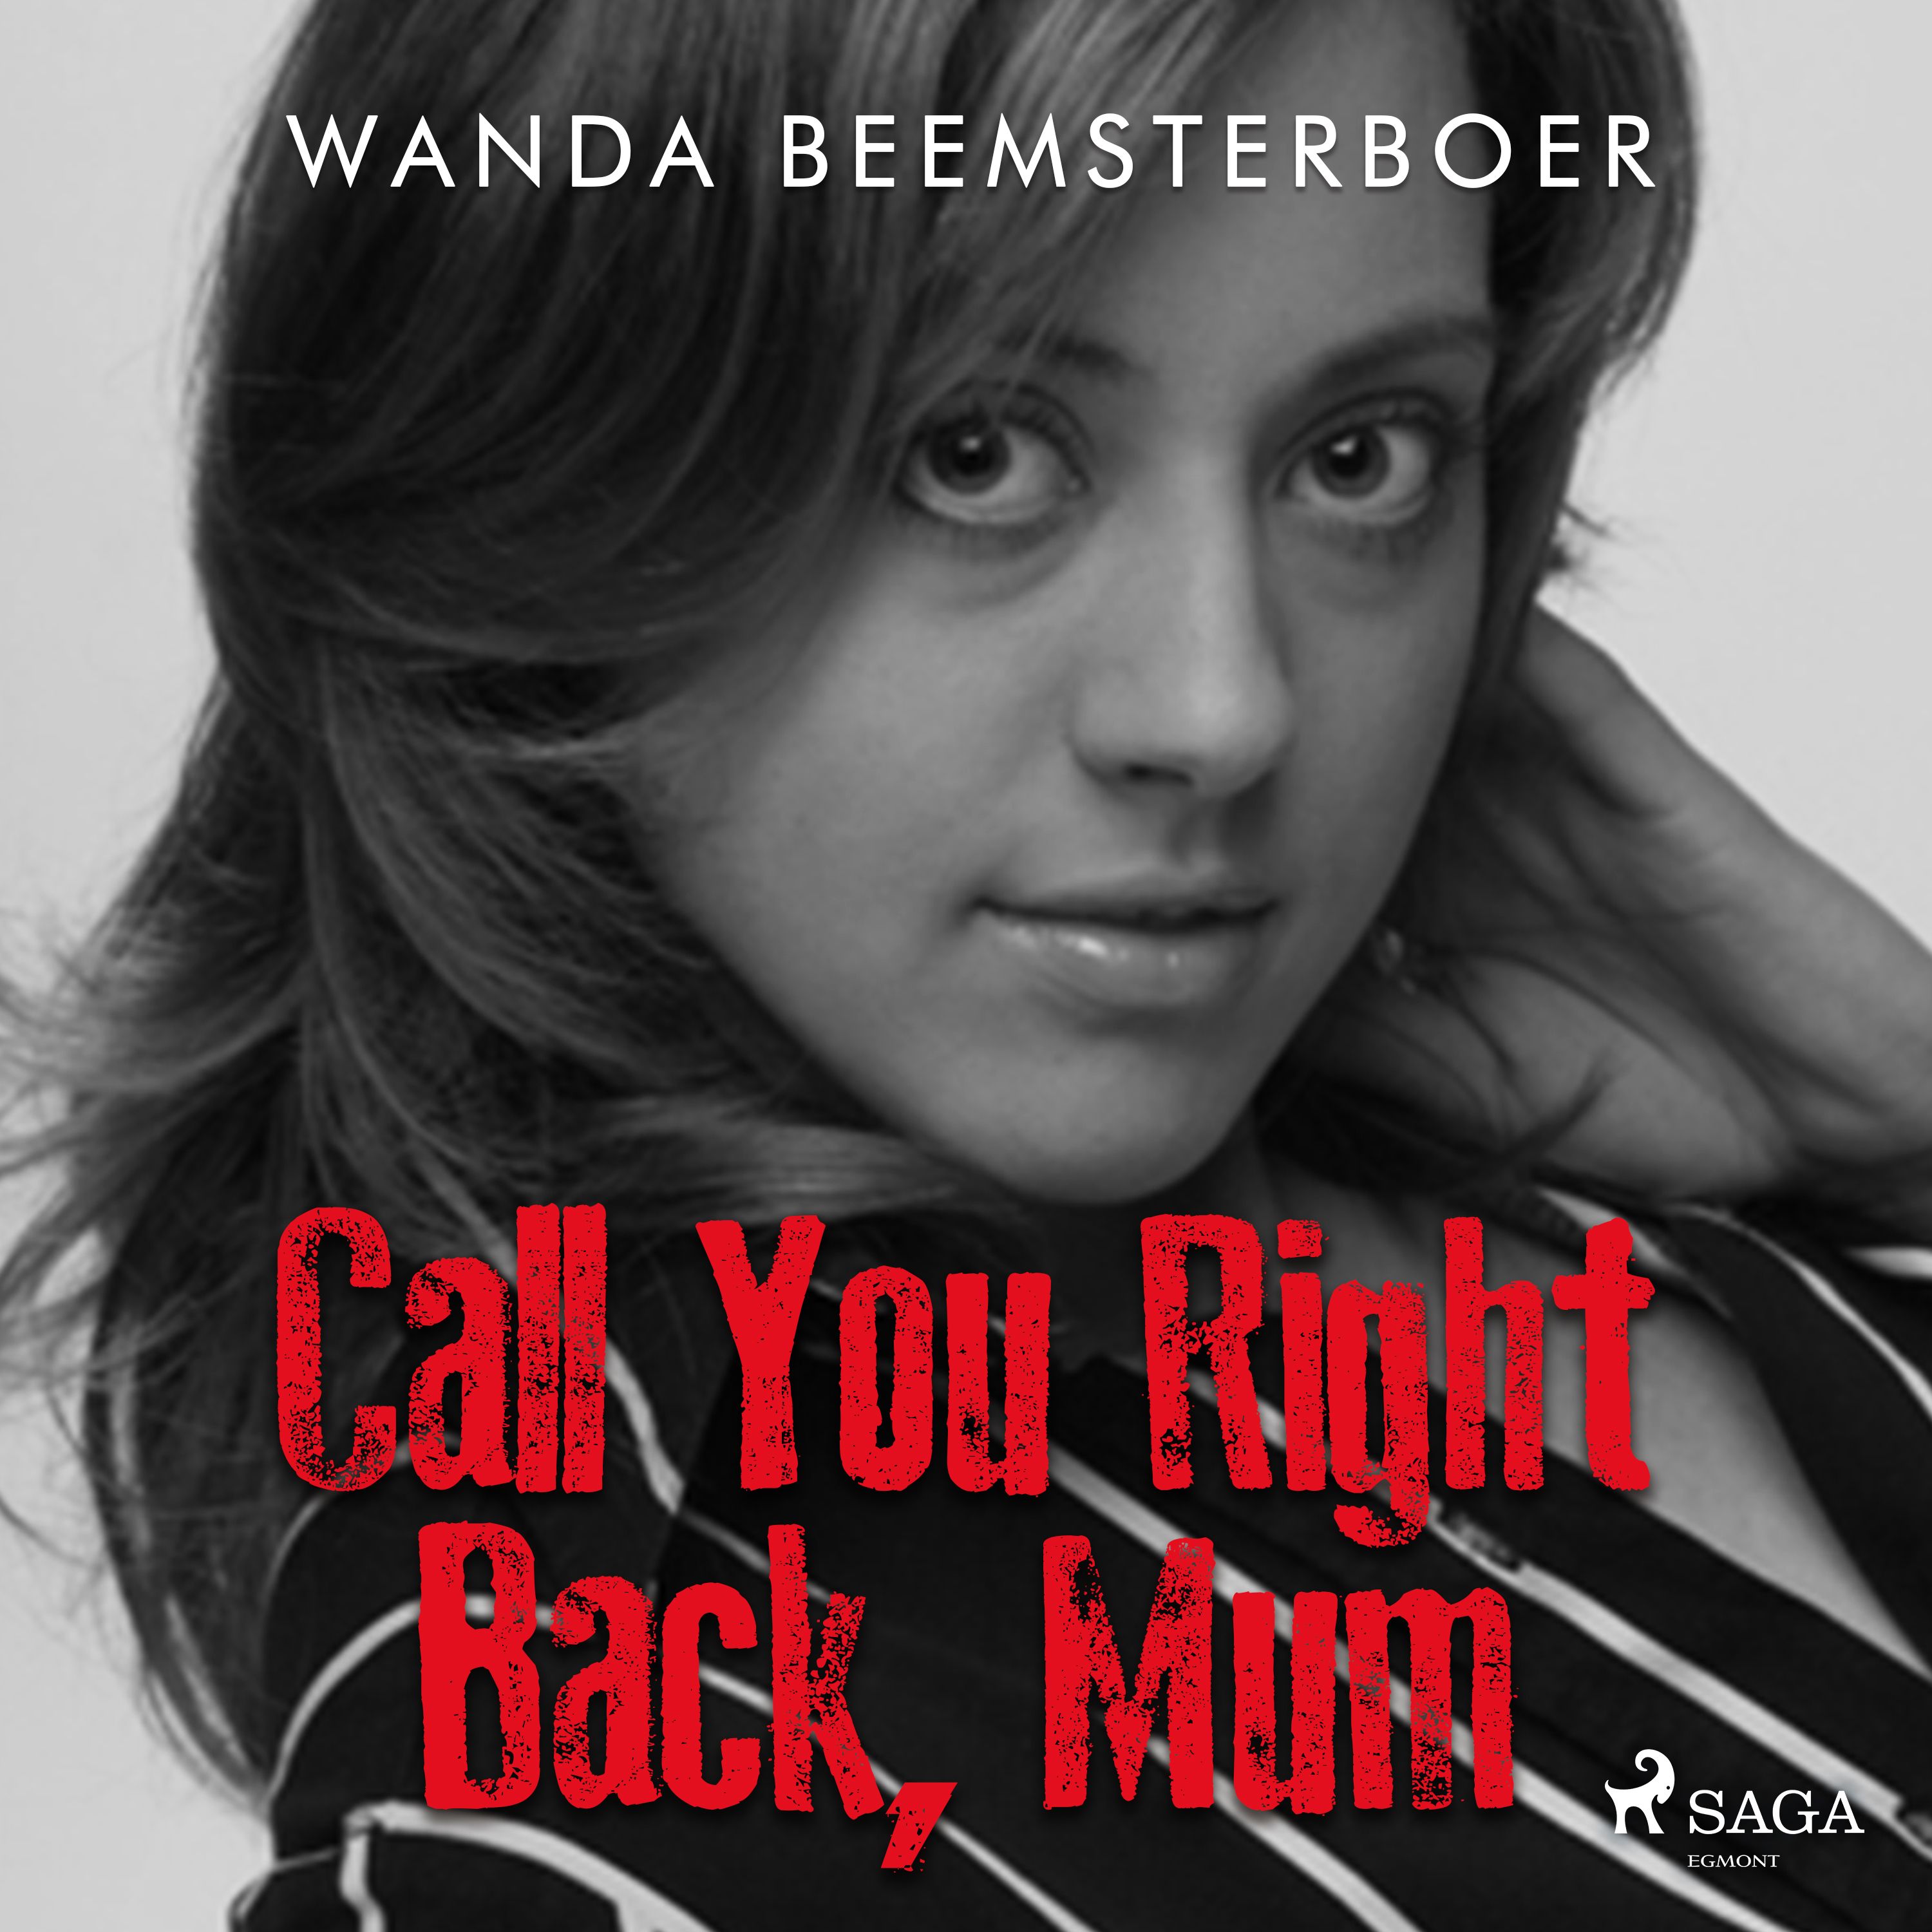 Call You Right Back, Mum, lydbog af Wanda Beemsterboer